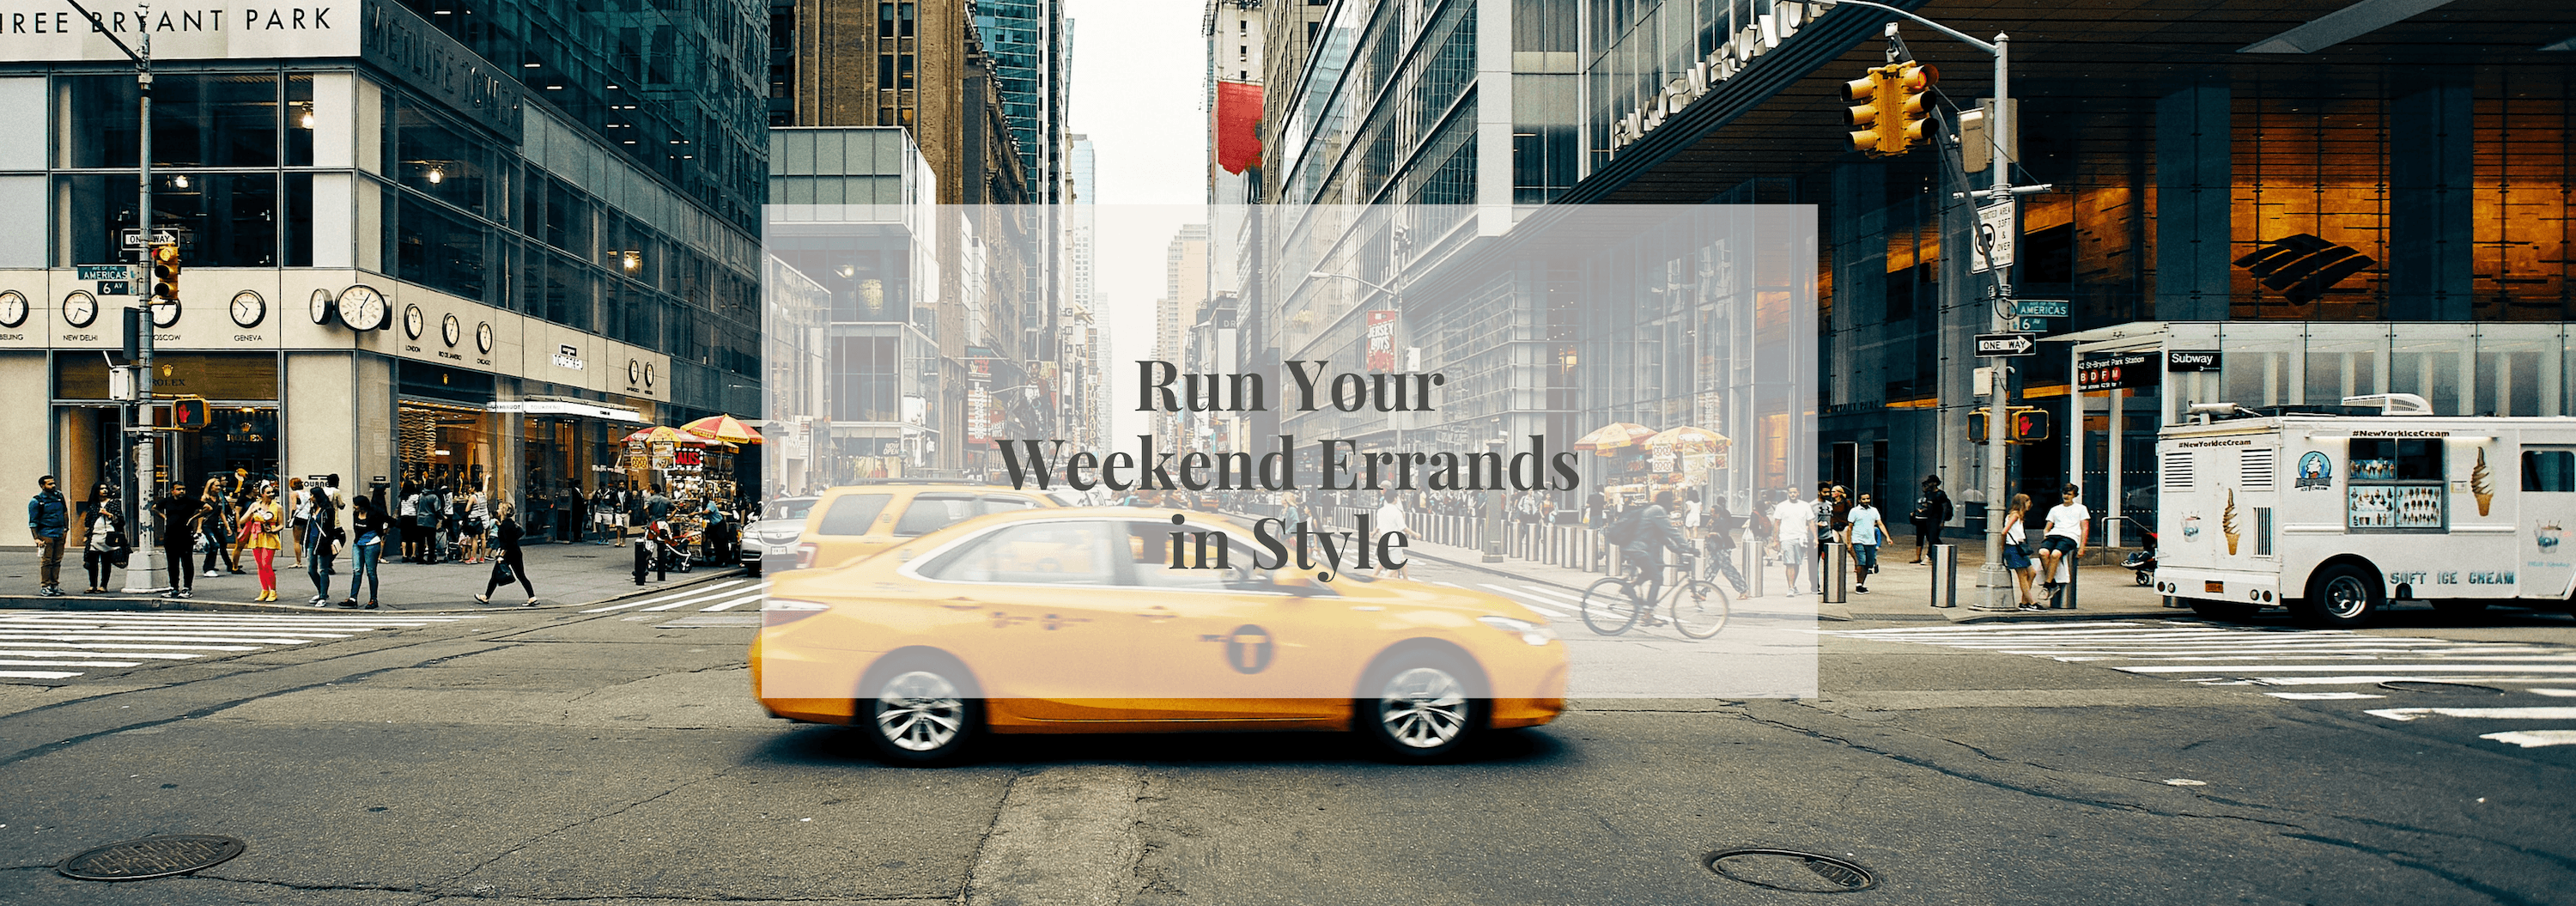 Run Your Weekend Errands in Style - Numi